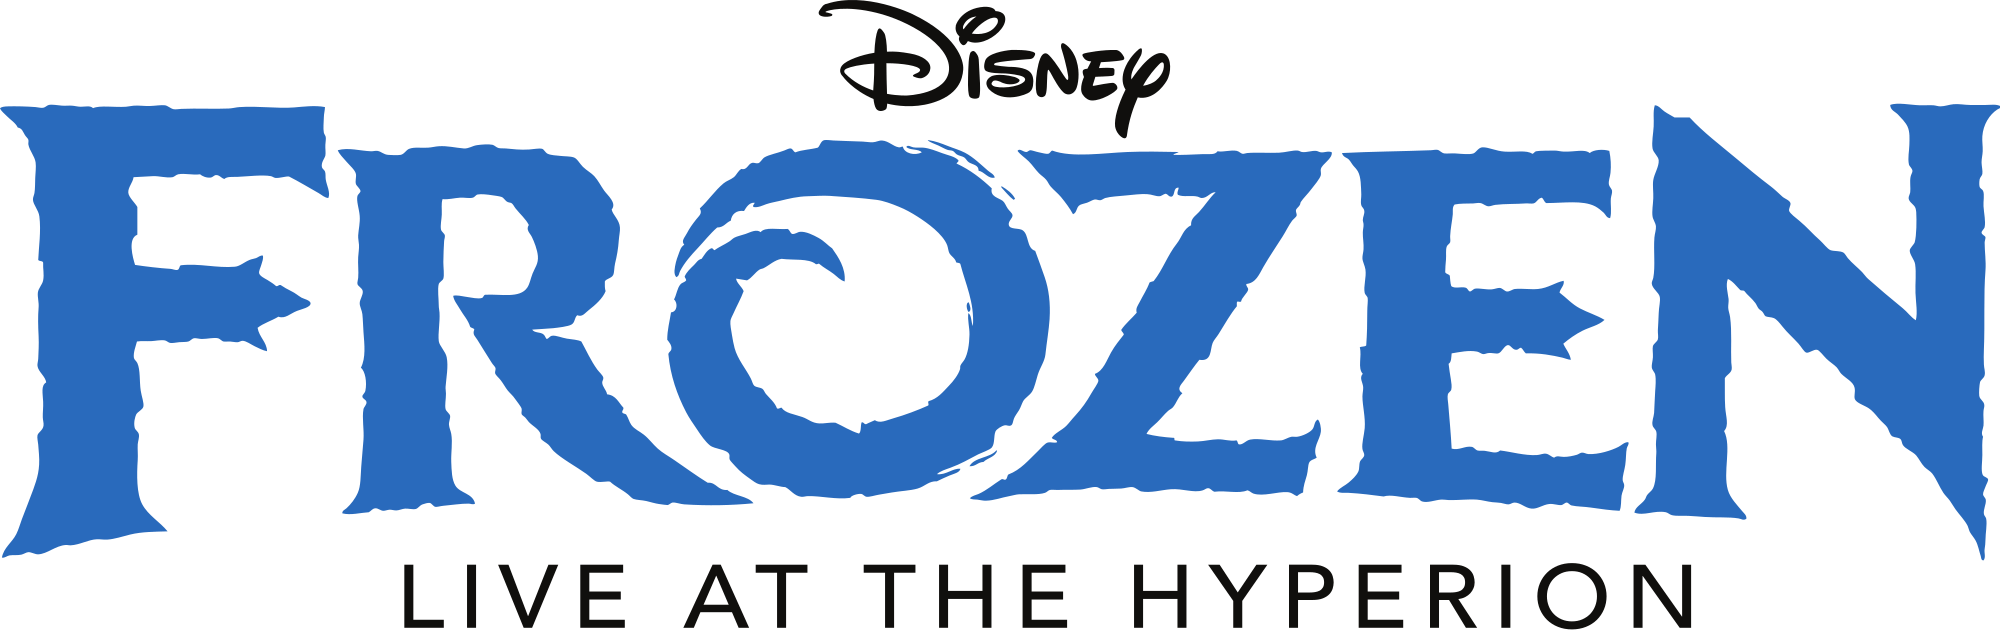 Blue Frozen Logo - File:Disney's Frozen - Live at the Hyperion (blue).svg - Wikimedia ...